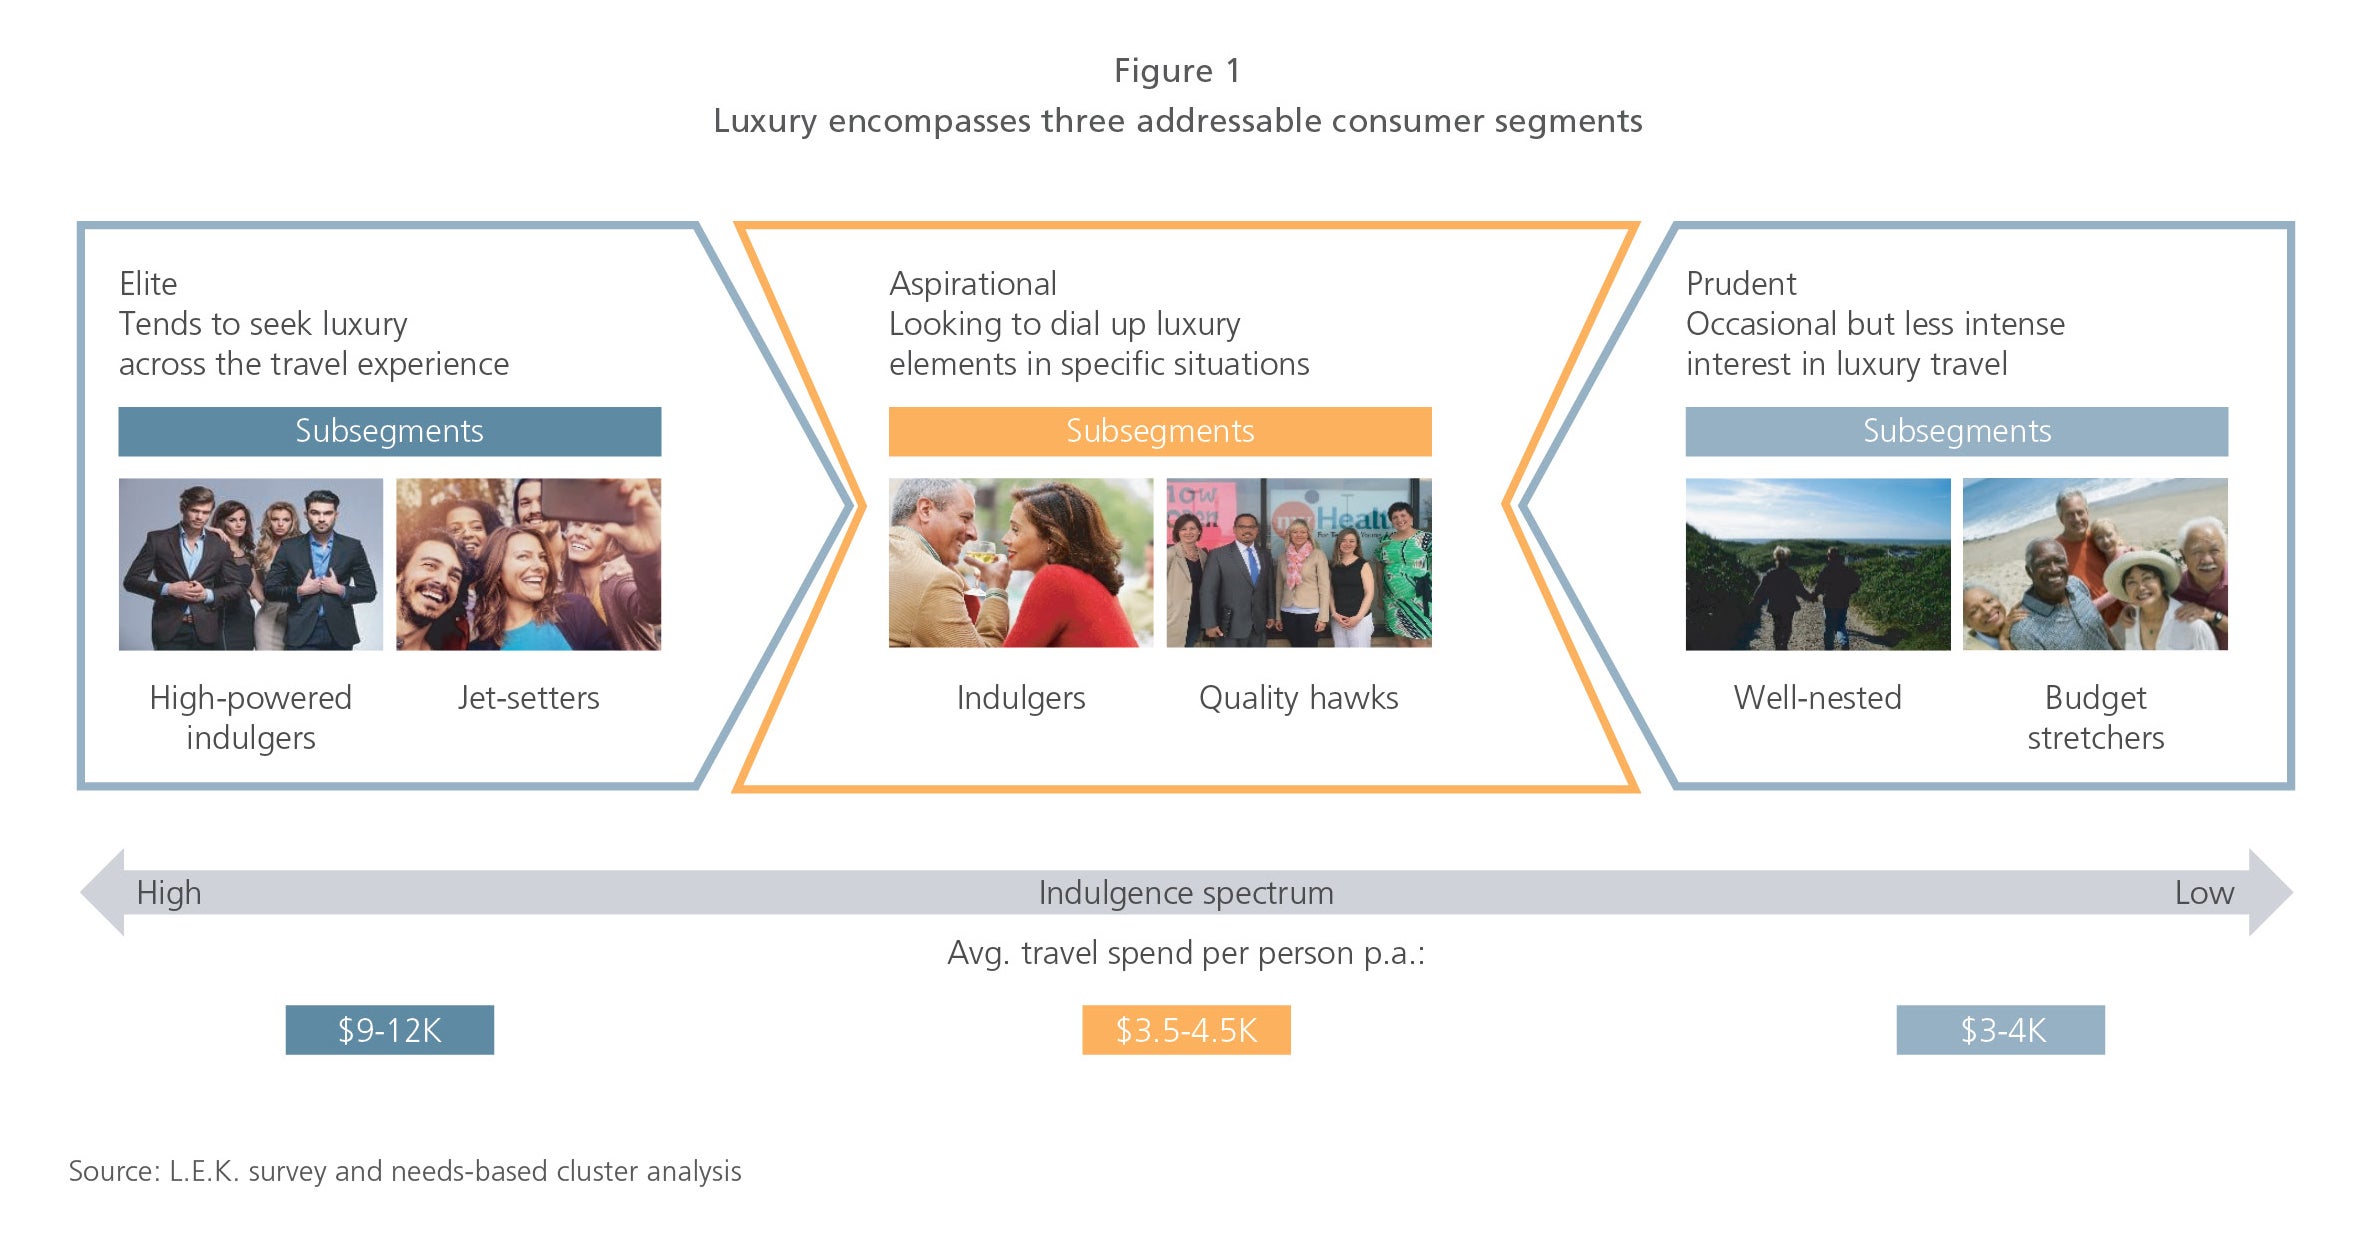 Luxury encompasses three addressable consumer segments